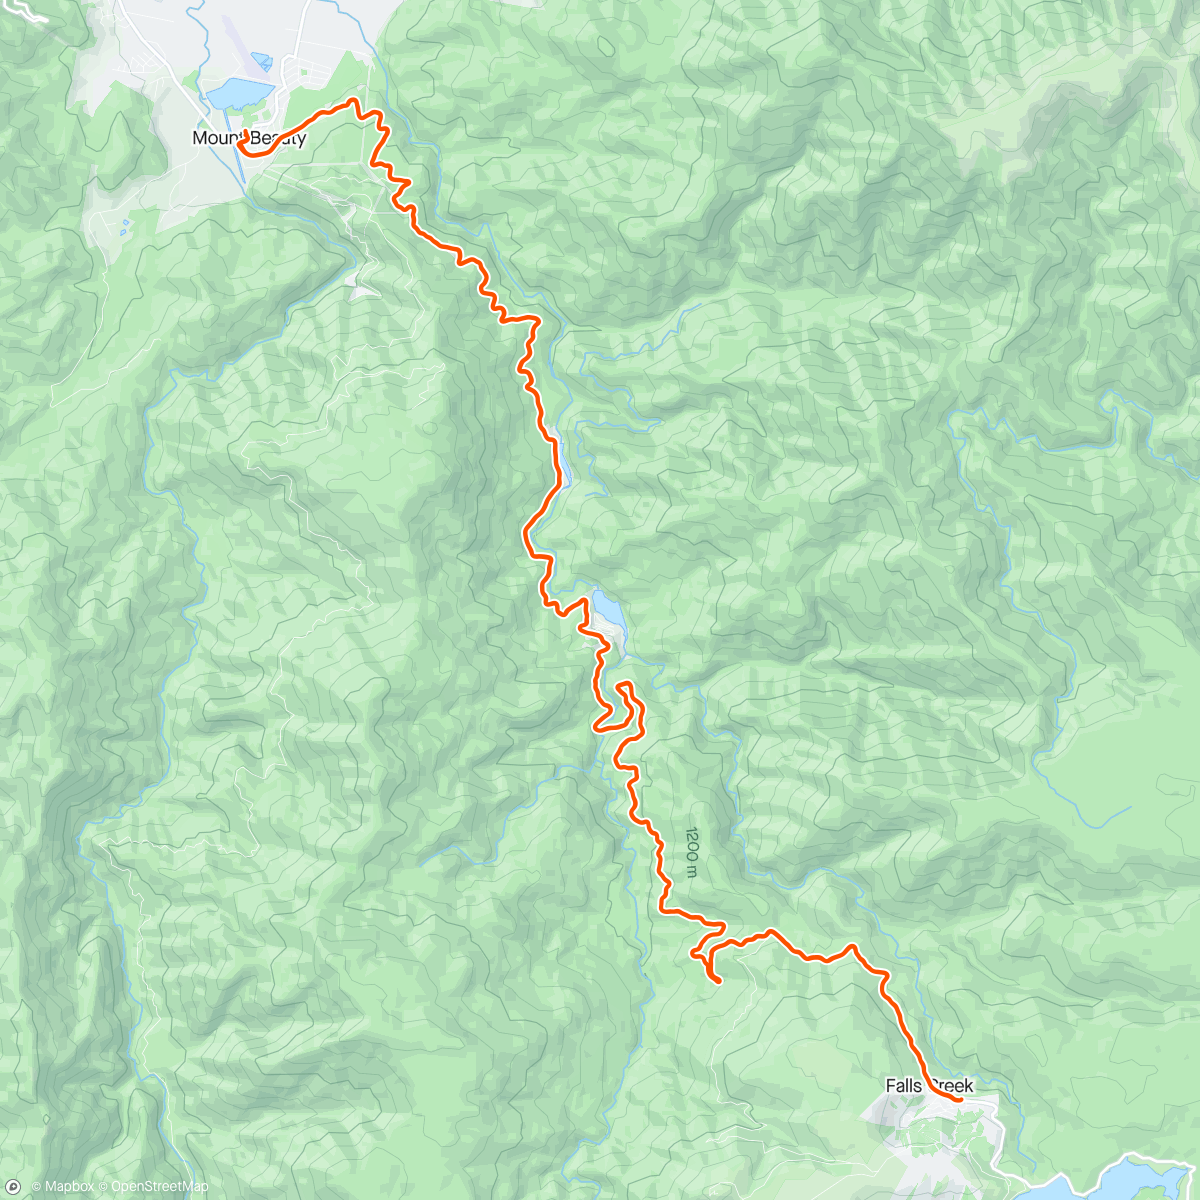 Mappa dell'attività Falls Creek - final climb in this region